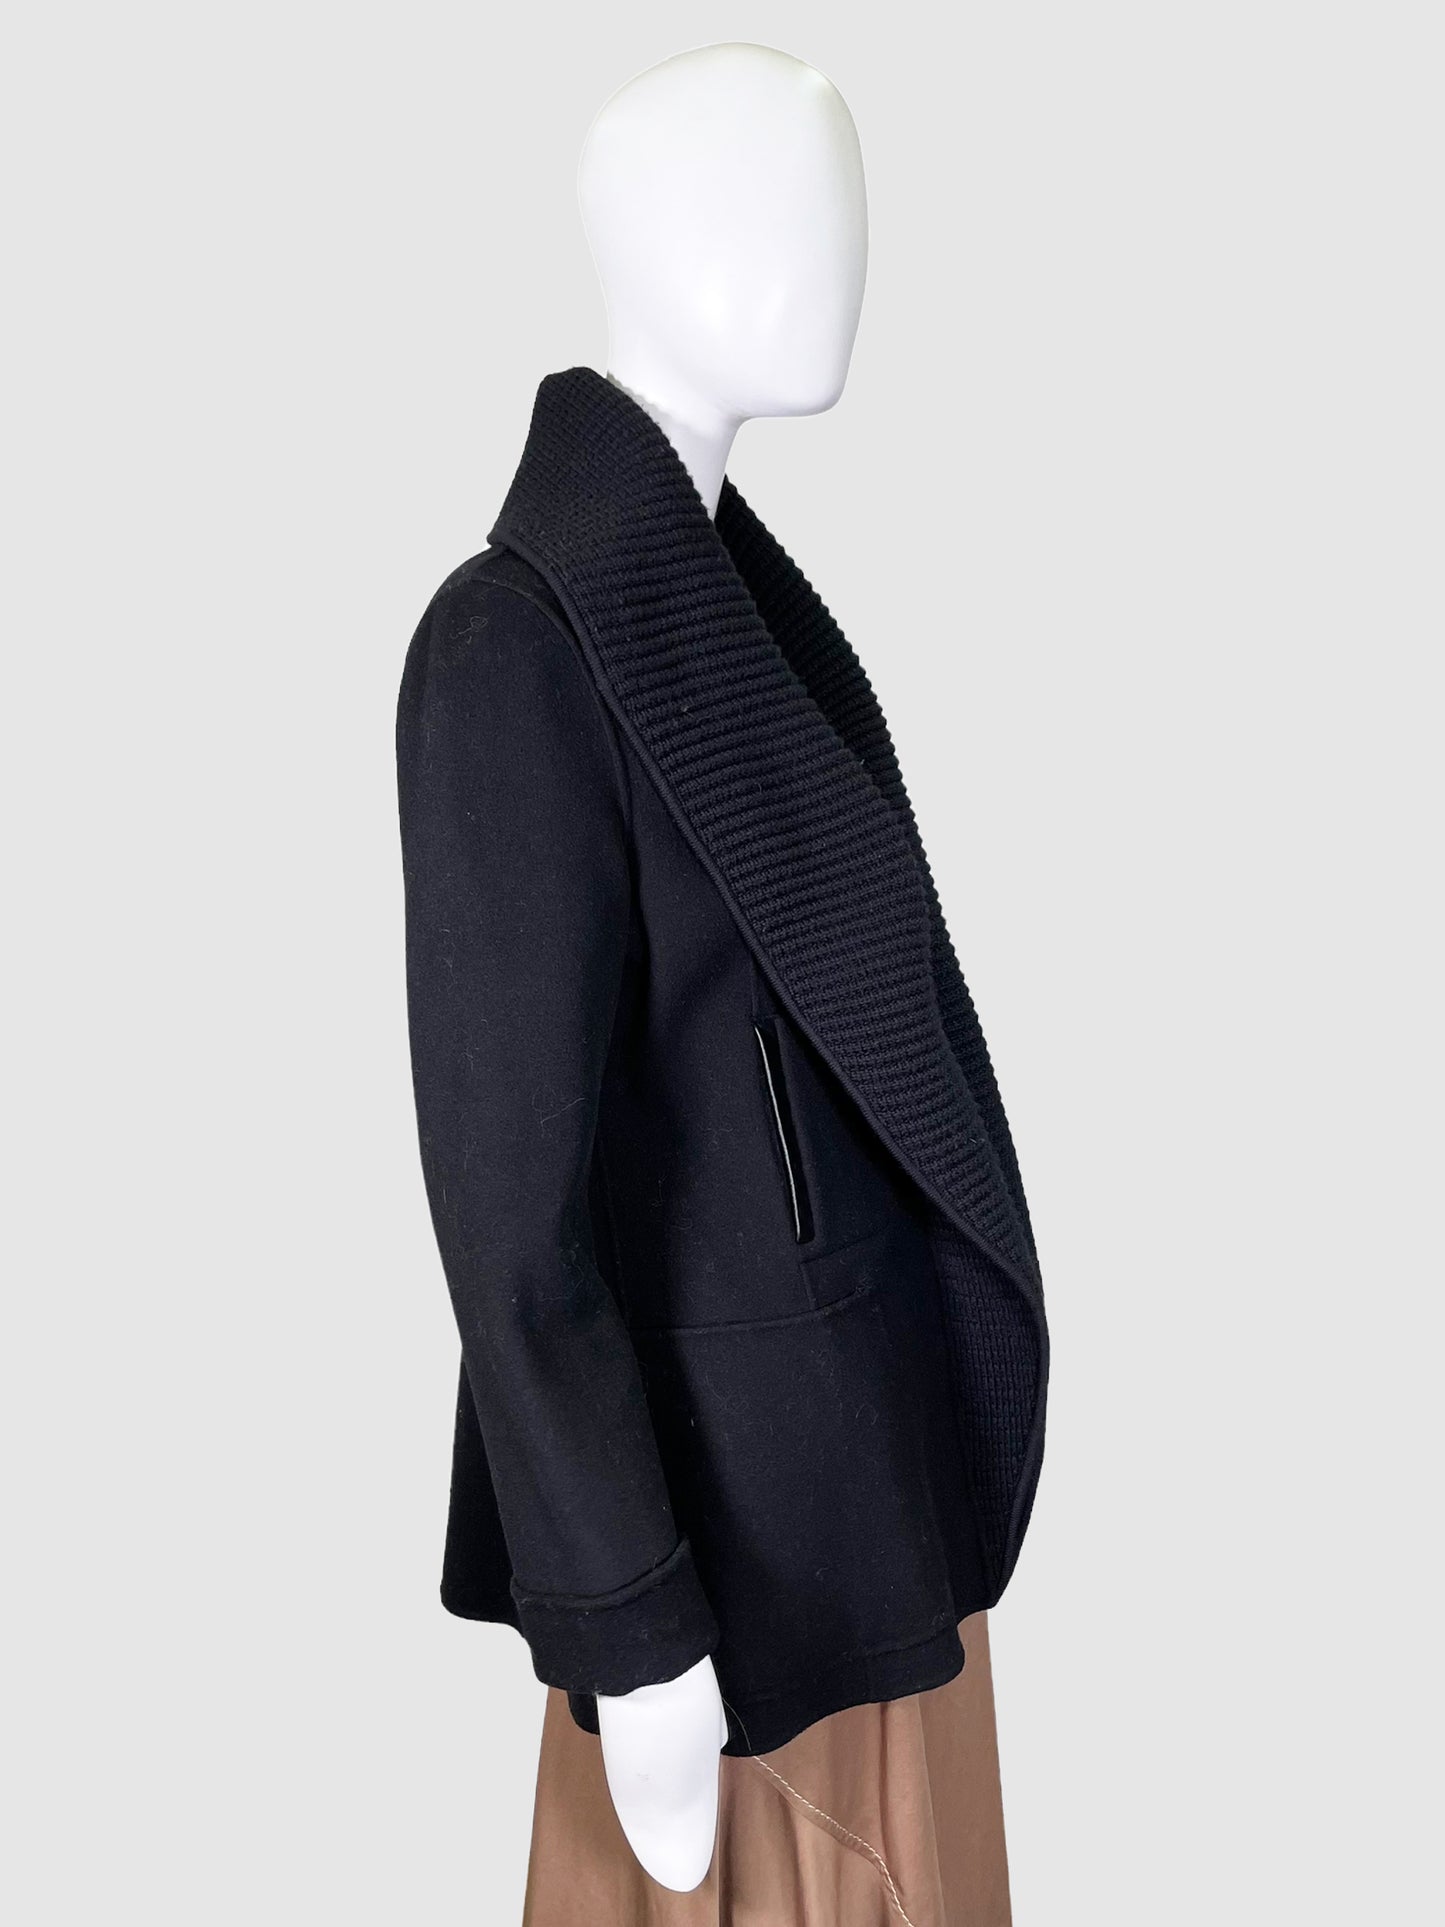 Mackage Black Ribbed Wool Jacket - Size M